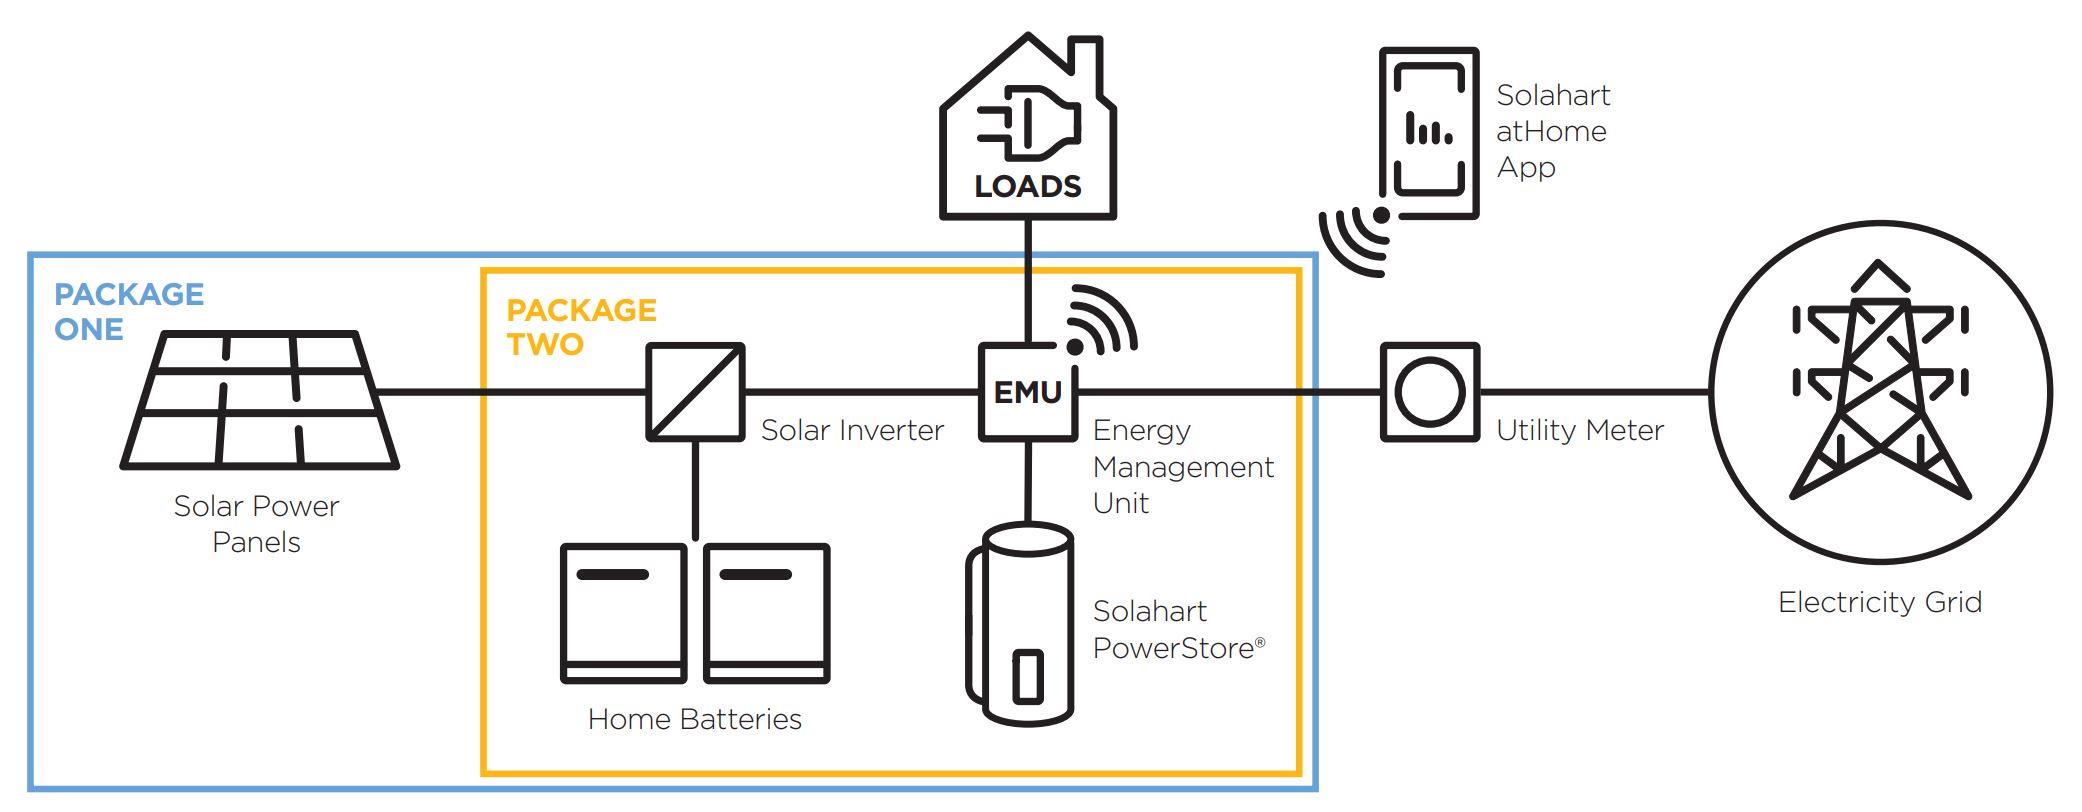 Solahart smart solar package energy flow graphic showing electricity grid, solahart smart systems, solar power system, solar batteries, inverter etc